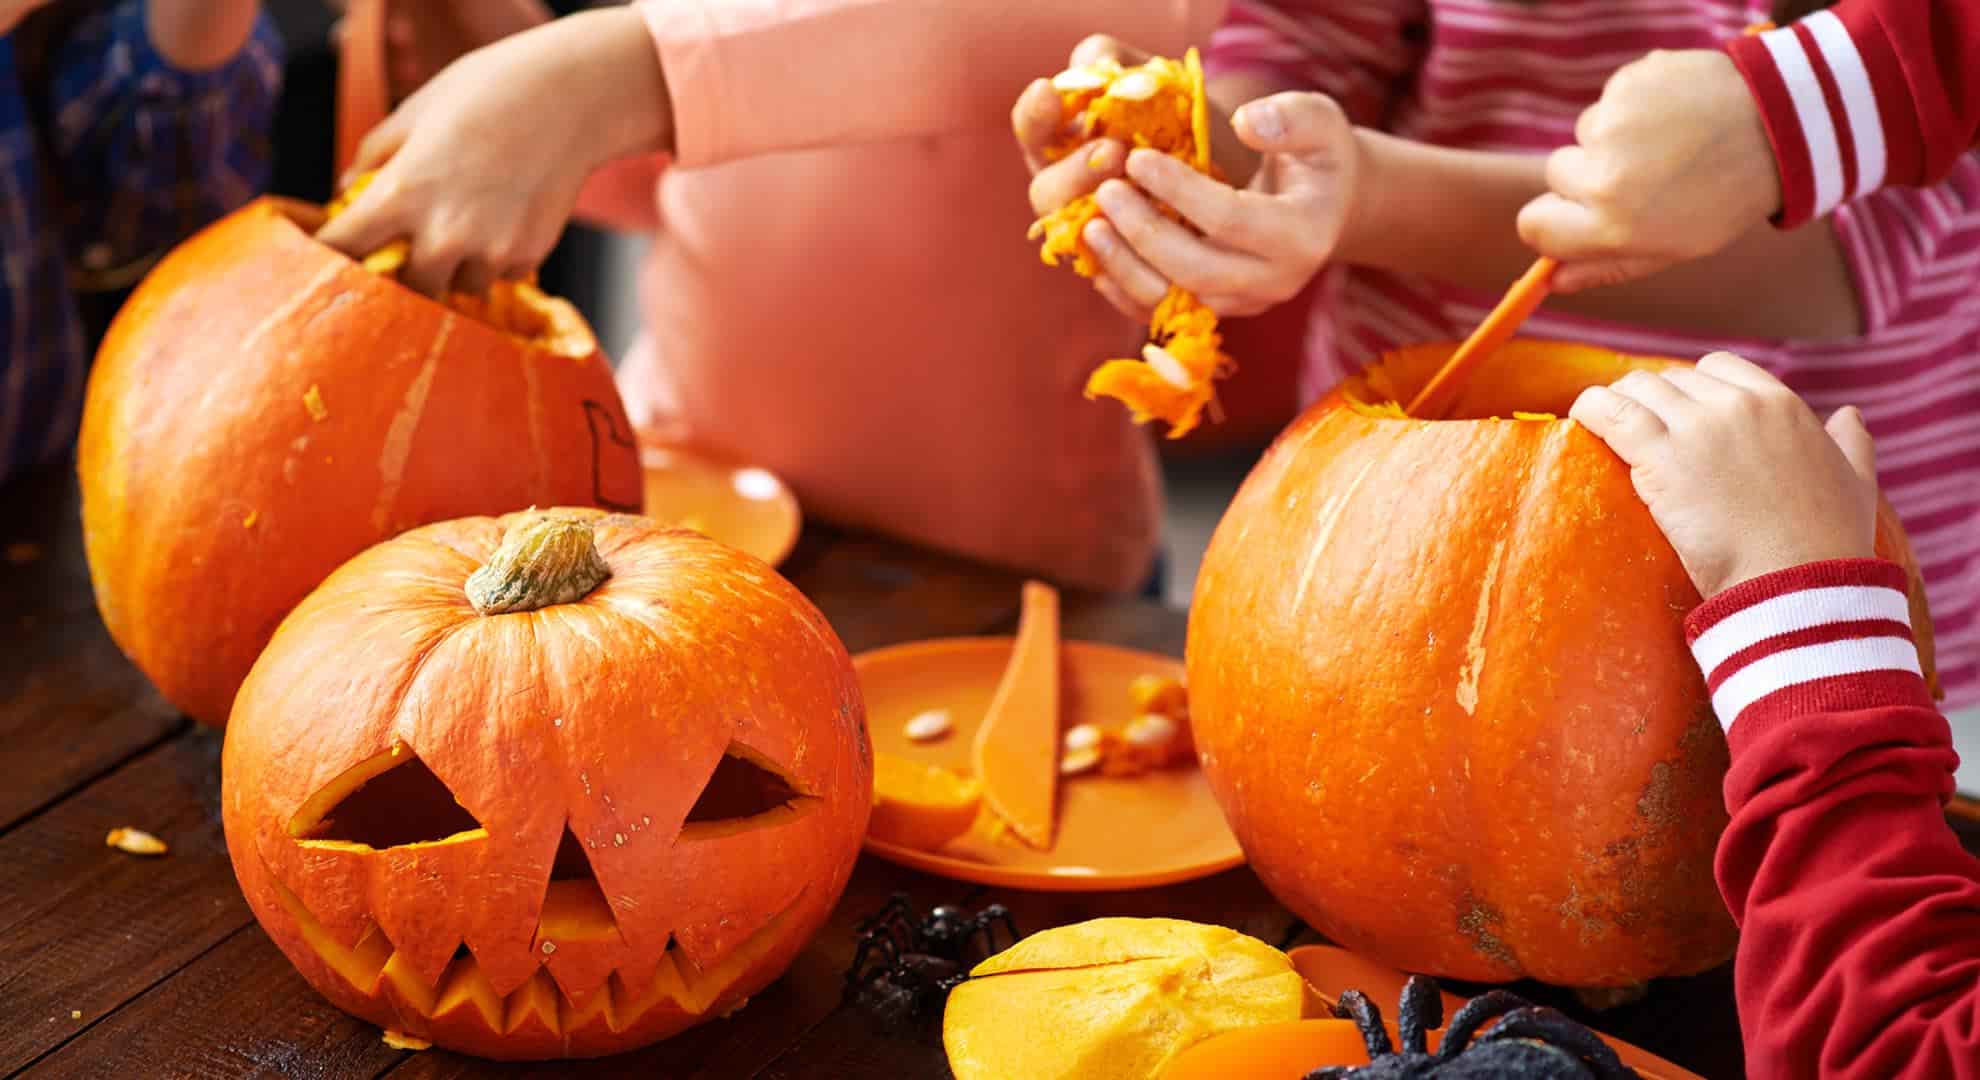 Children carving pumpkins by hand